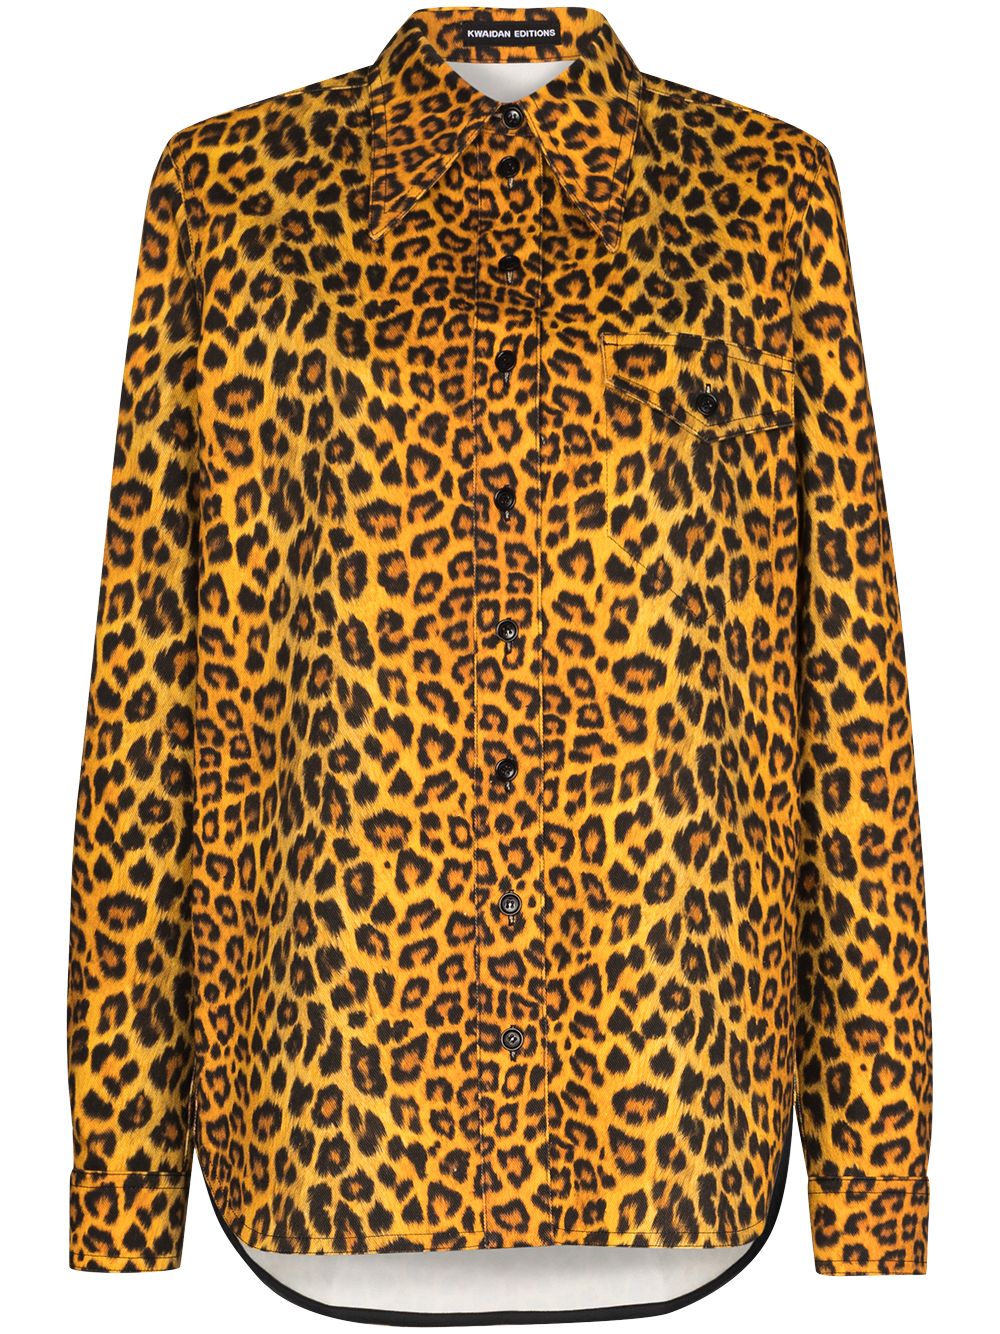 leopard-print denim shirt